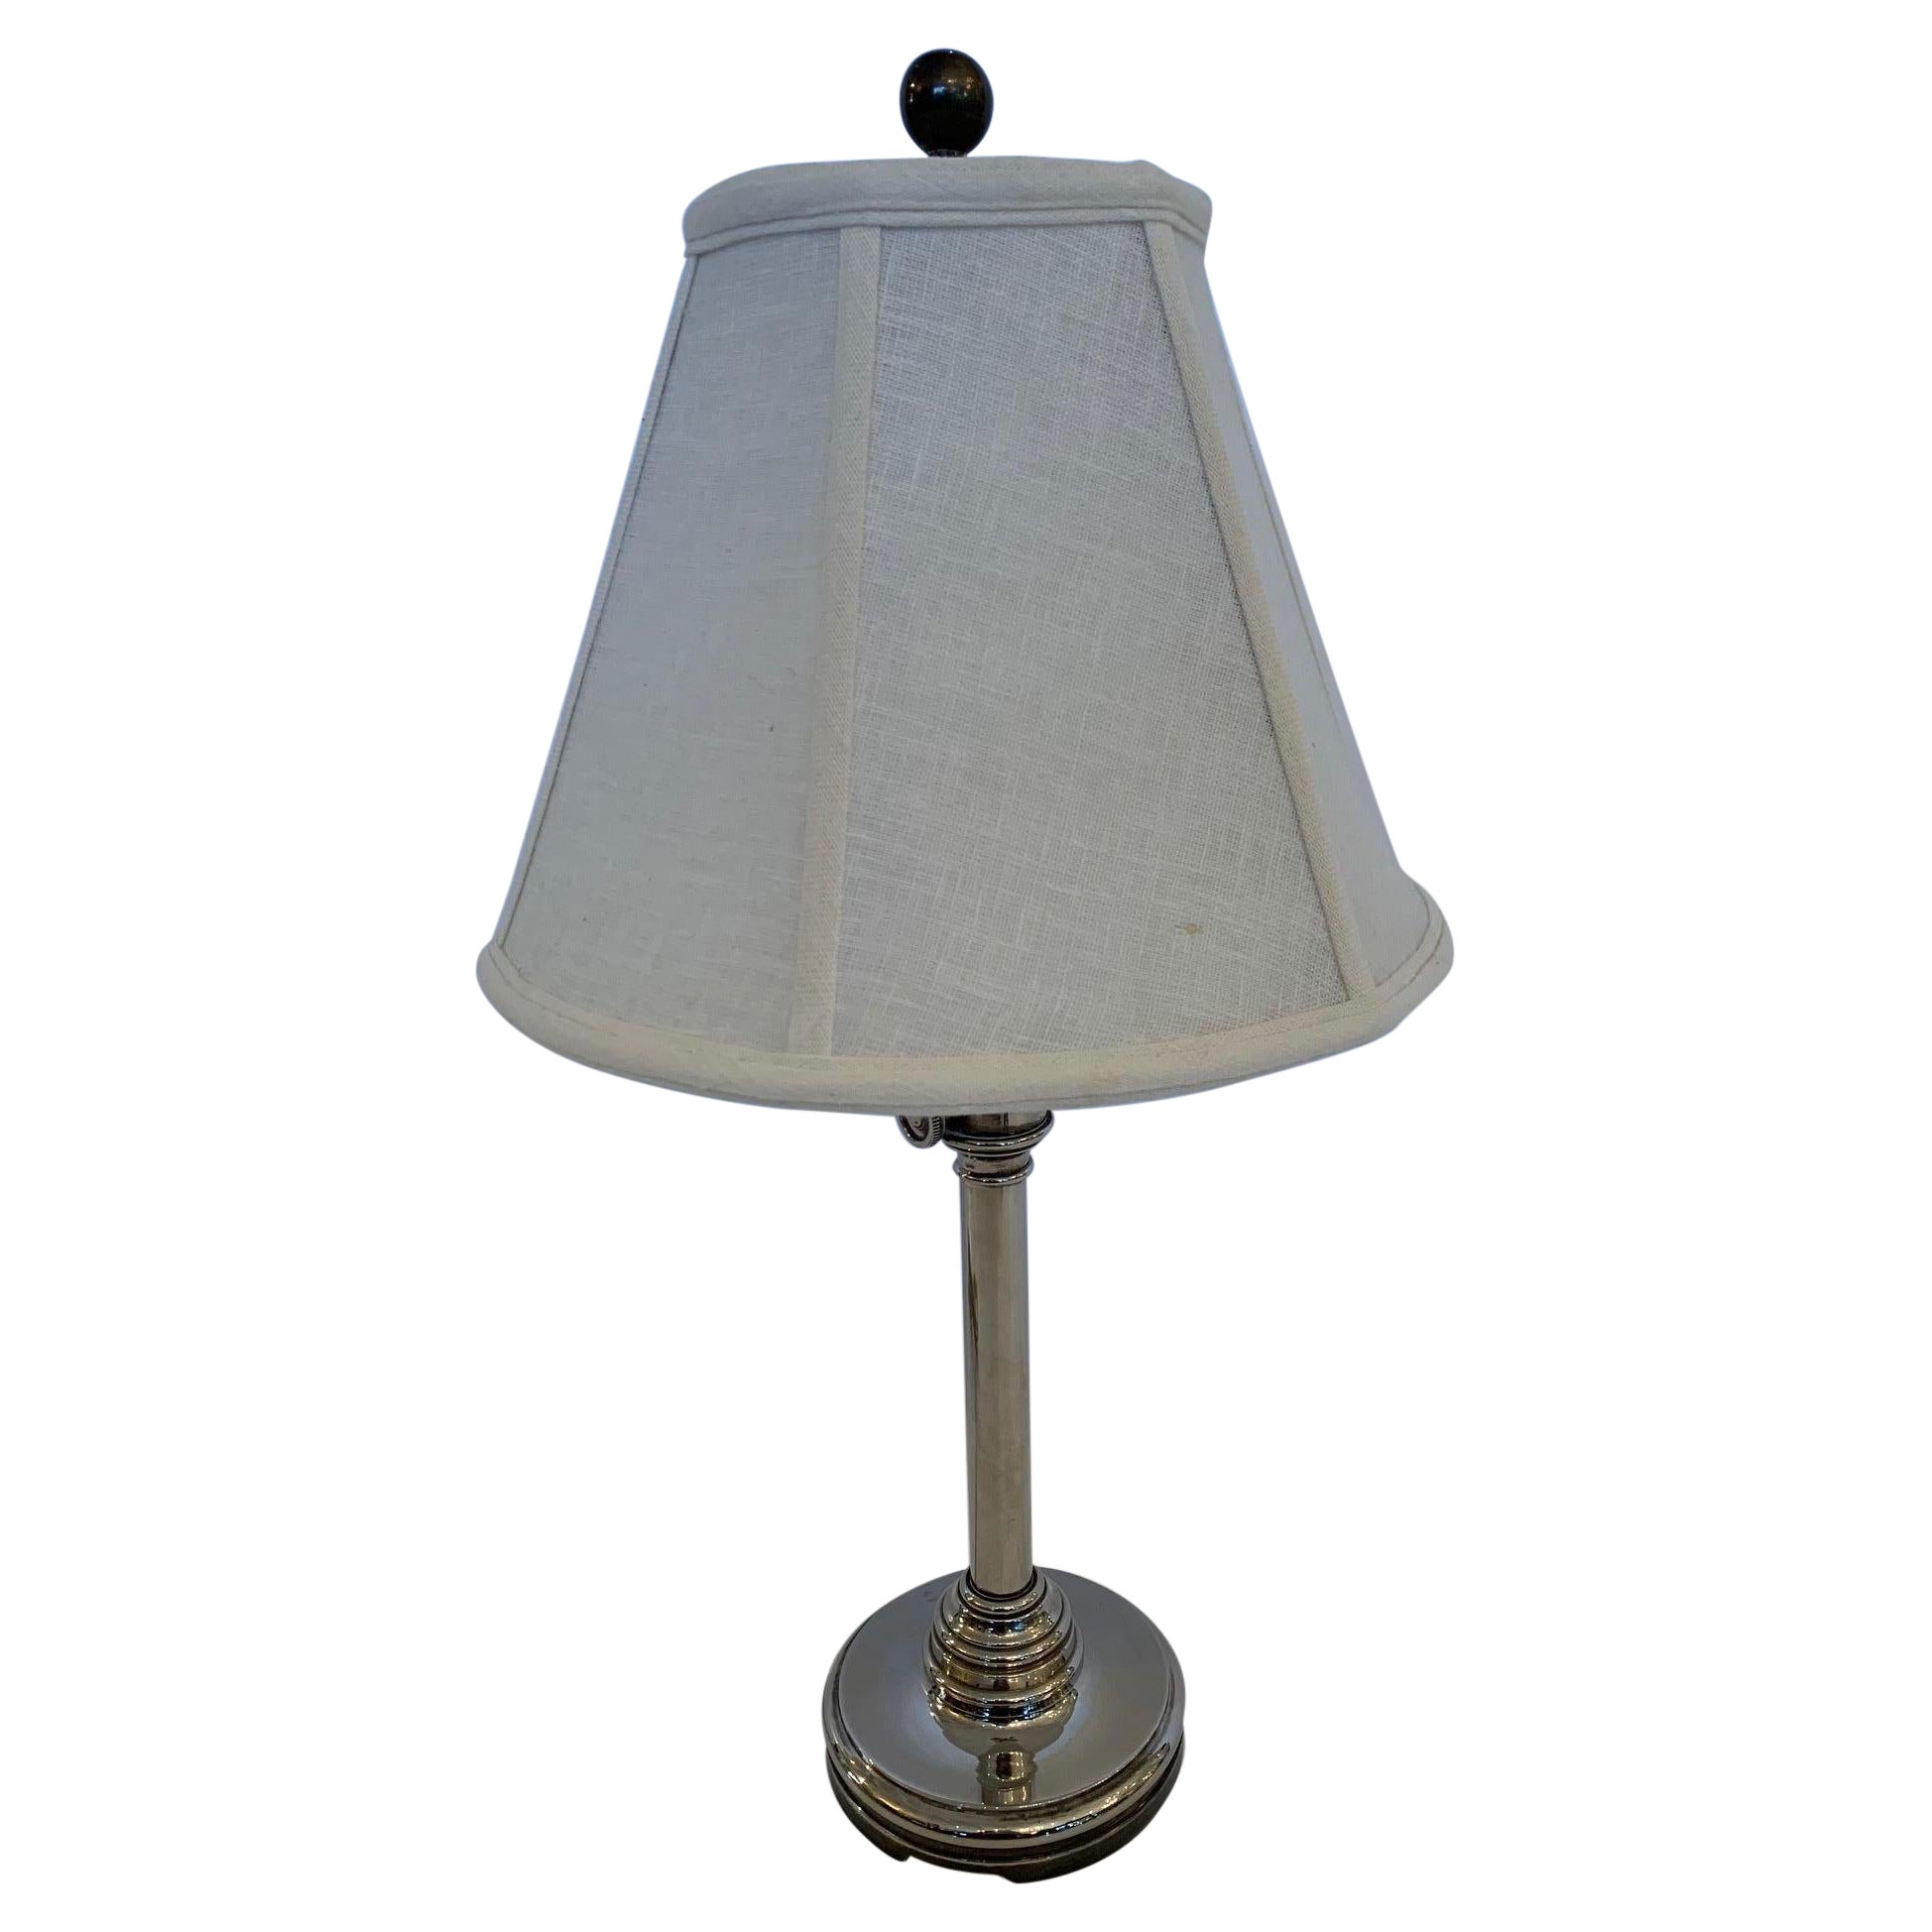 Diminutive Classy Chrome Table Lamp For Sale